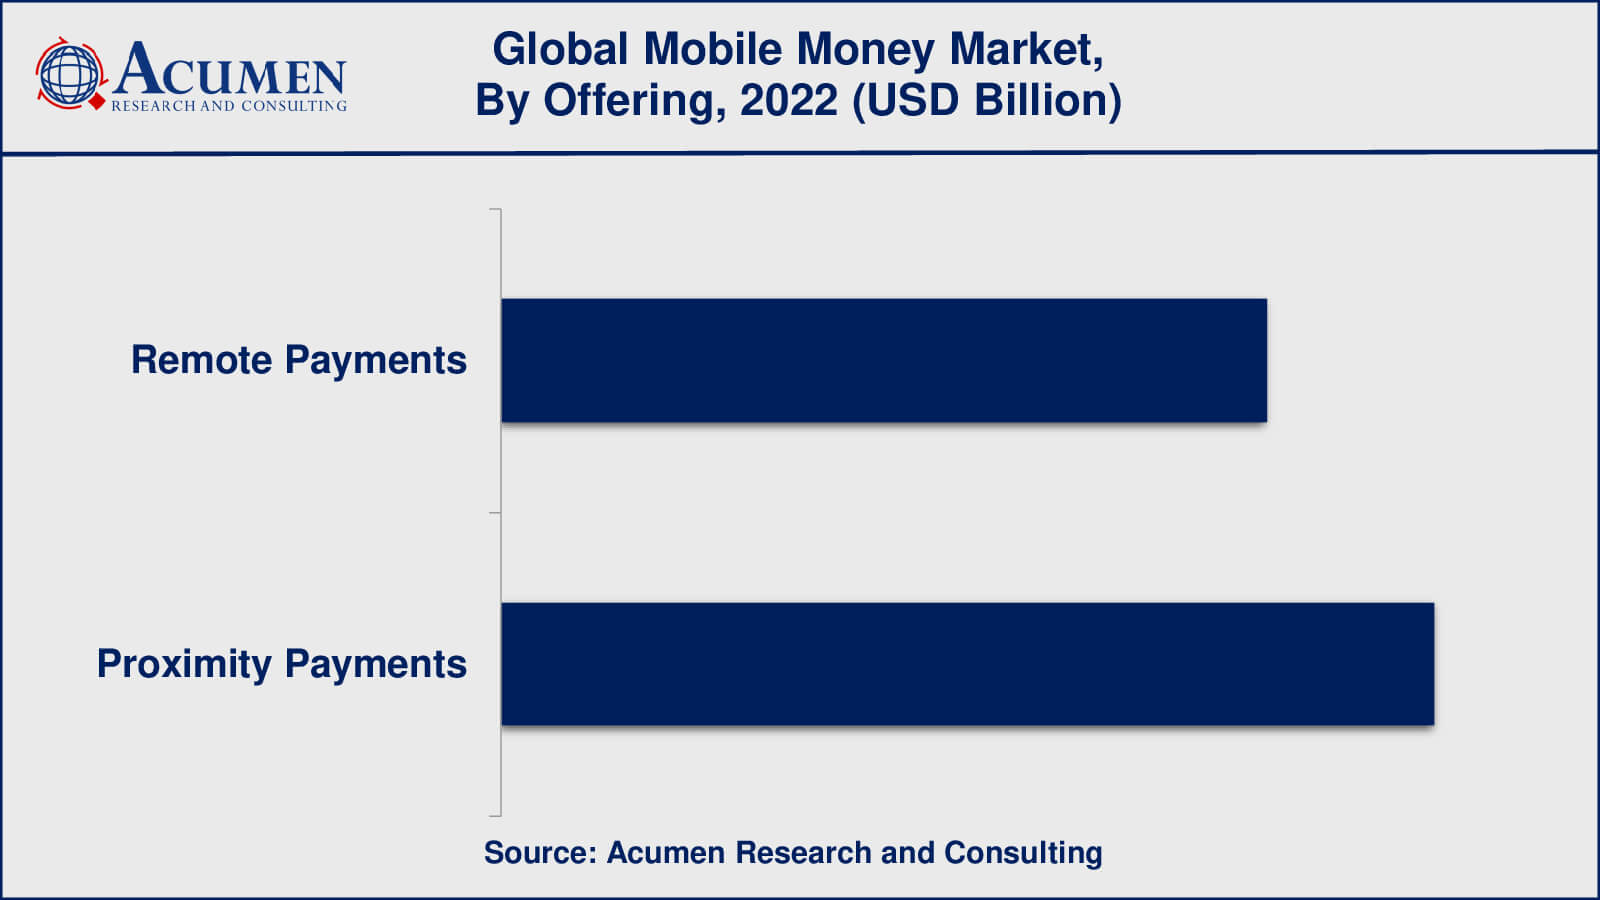 Mobile Money Market Drivers